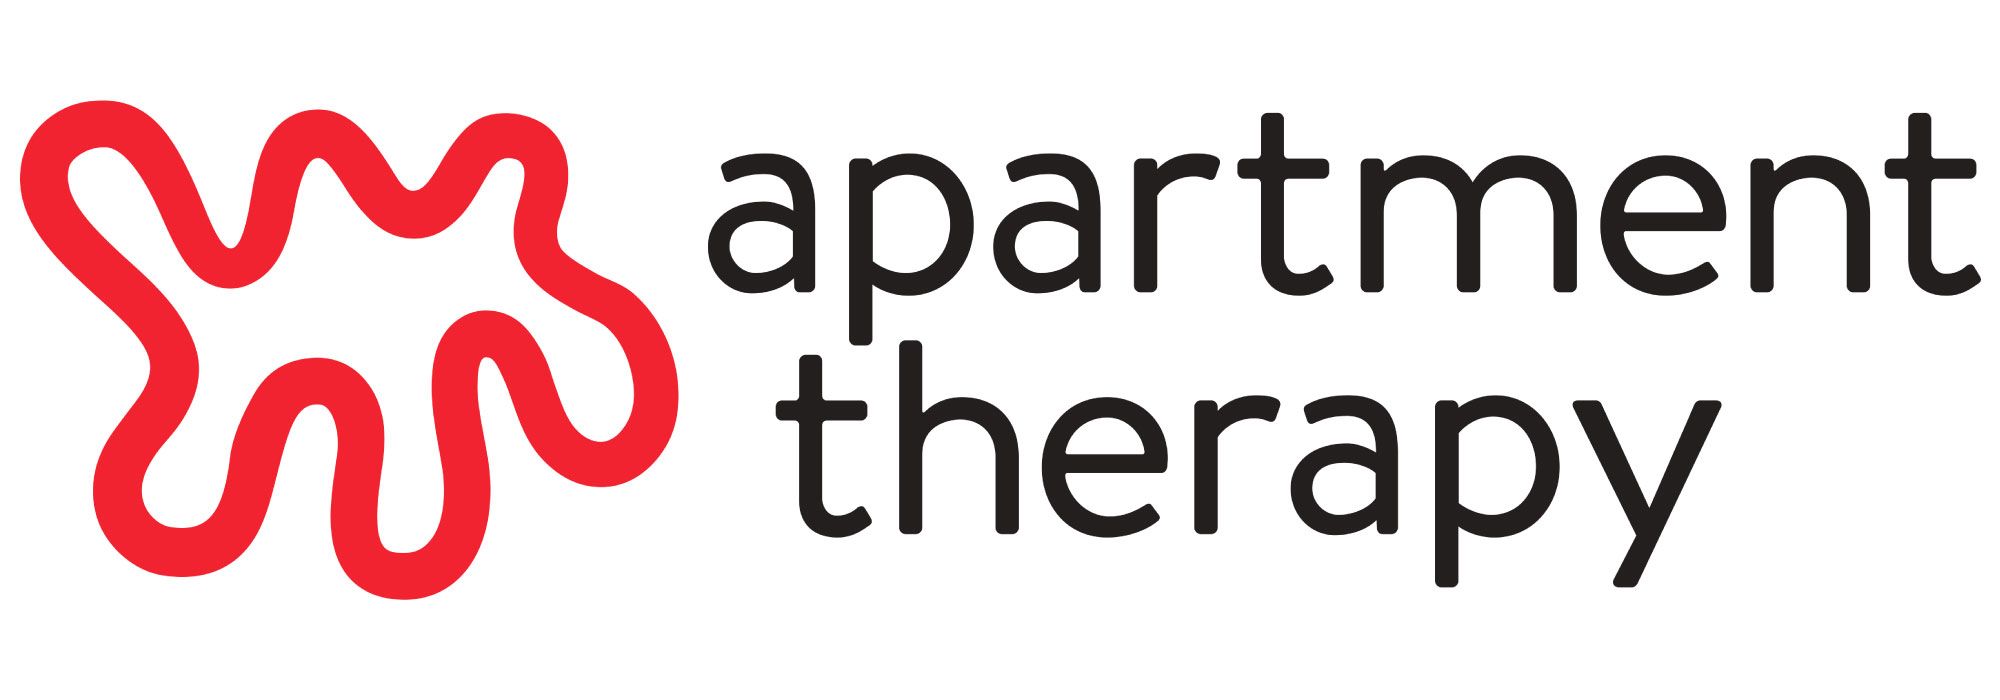 Apartment Therapy Logo